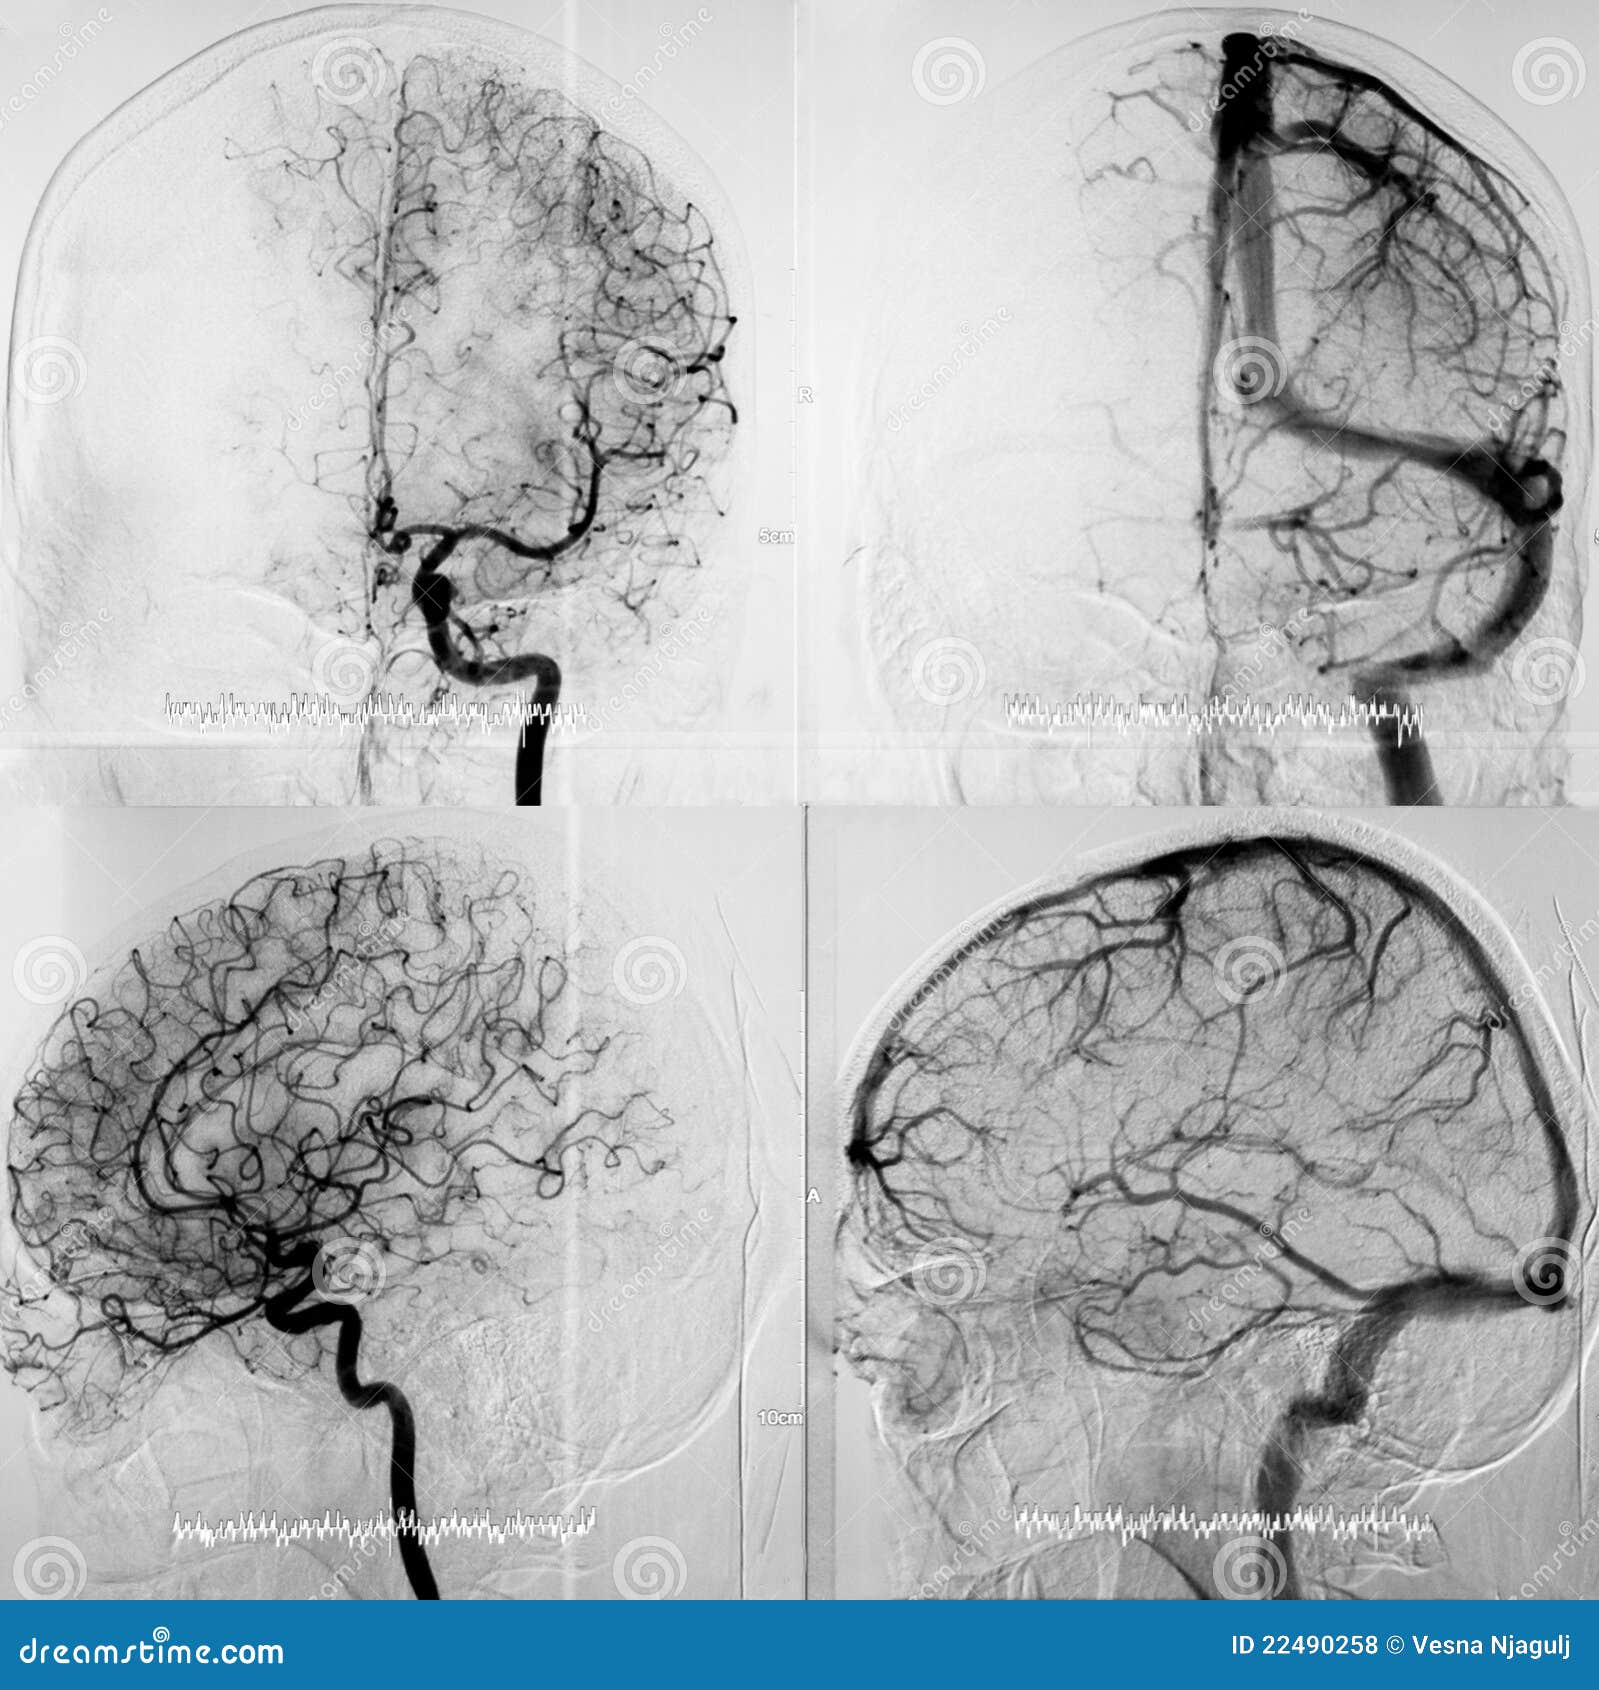 DSA of the Cranial Circulation, Both Phases Photo - of human, artery: